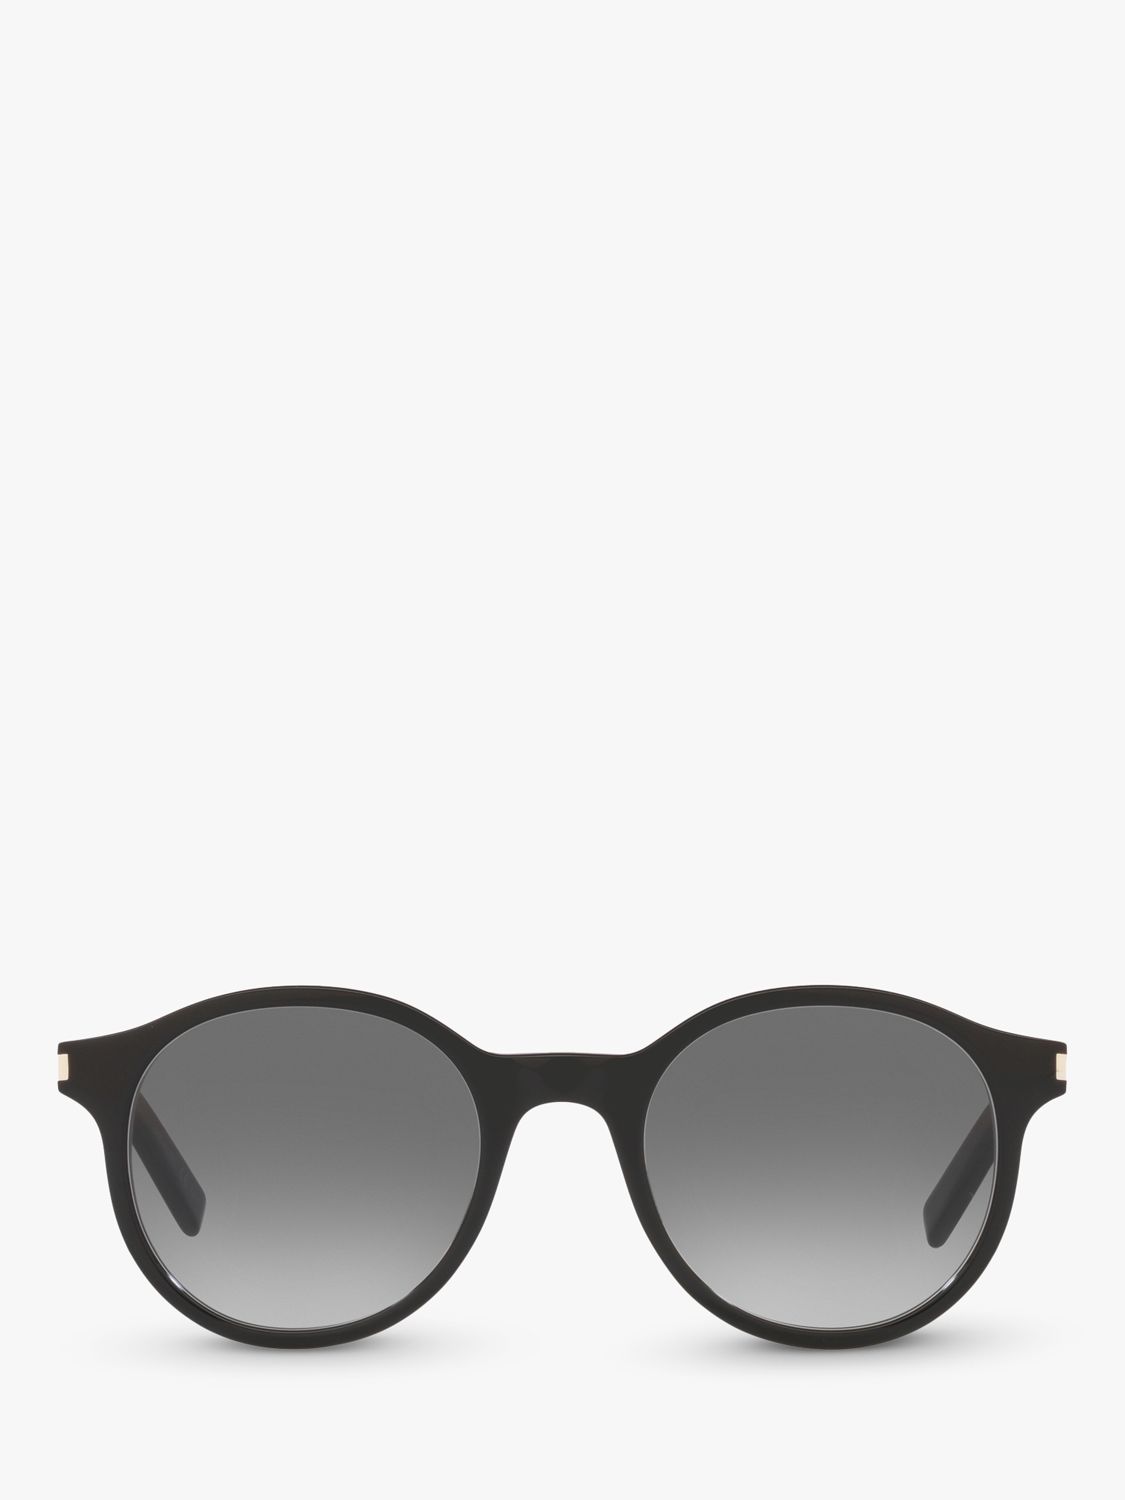 Buy Yves Saint Laurent SL 521 Unisex Round Sunglasses, Black/Grey Gradient Online at johnlewis.com